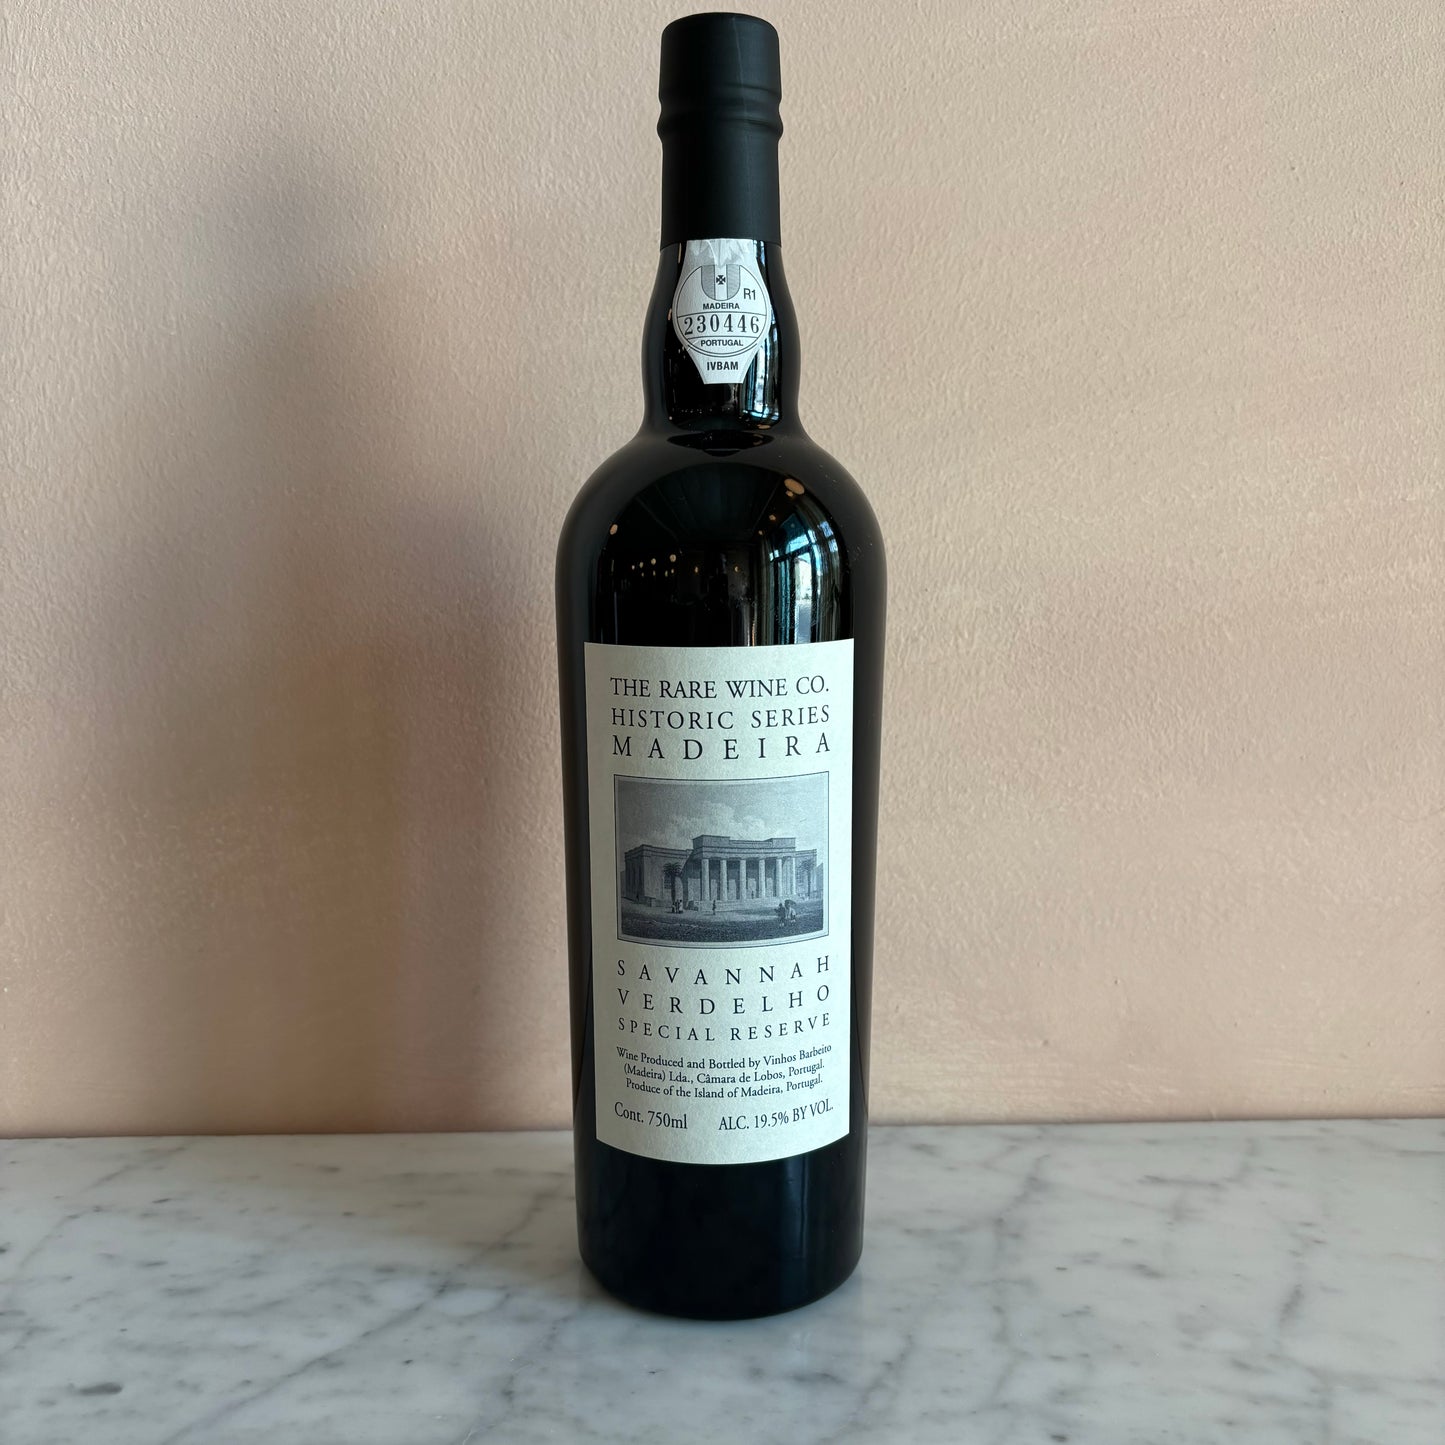 Rare Wine Co. Historic Series "Savannah" Verdelho Special Reserve Madeira